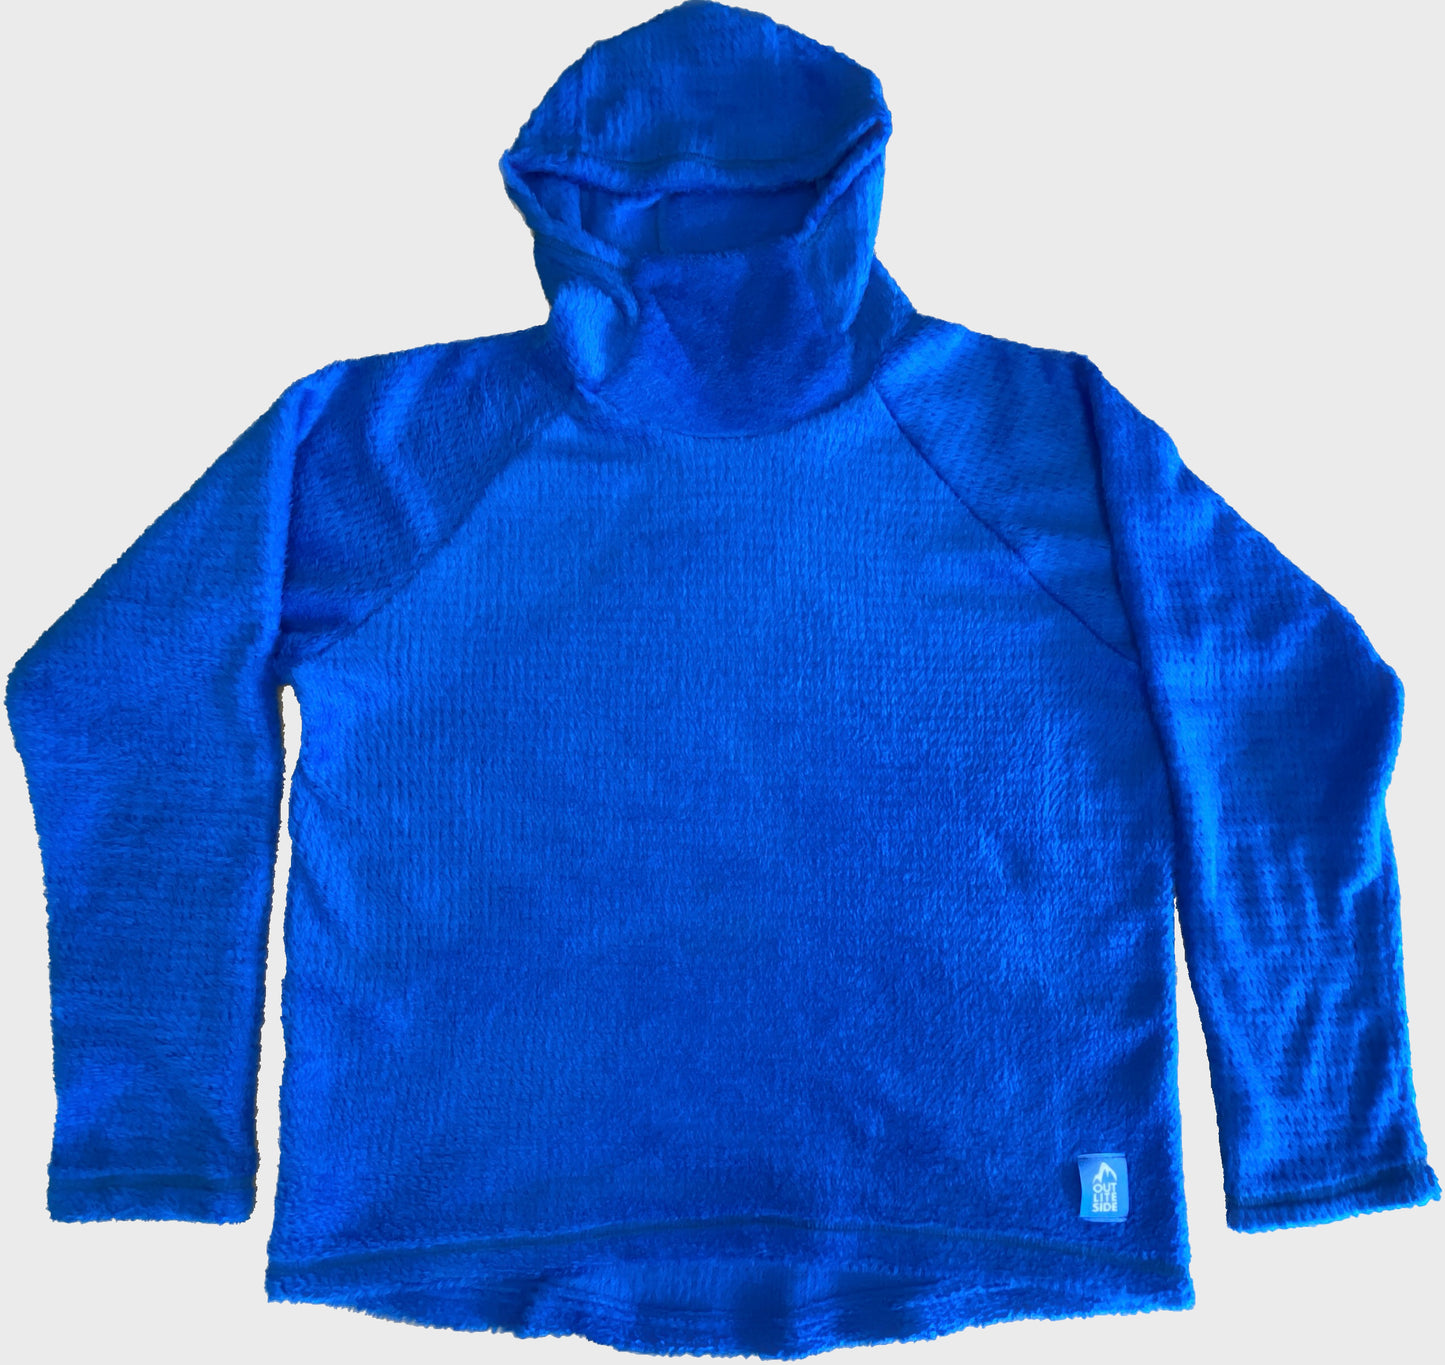 Alpha 130 hoodie for men in blue